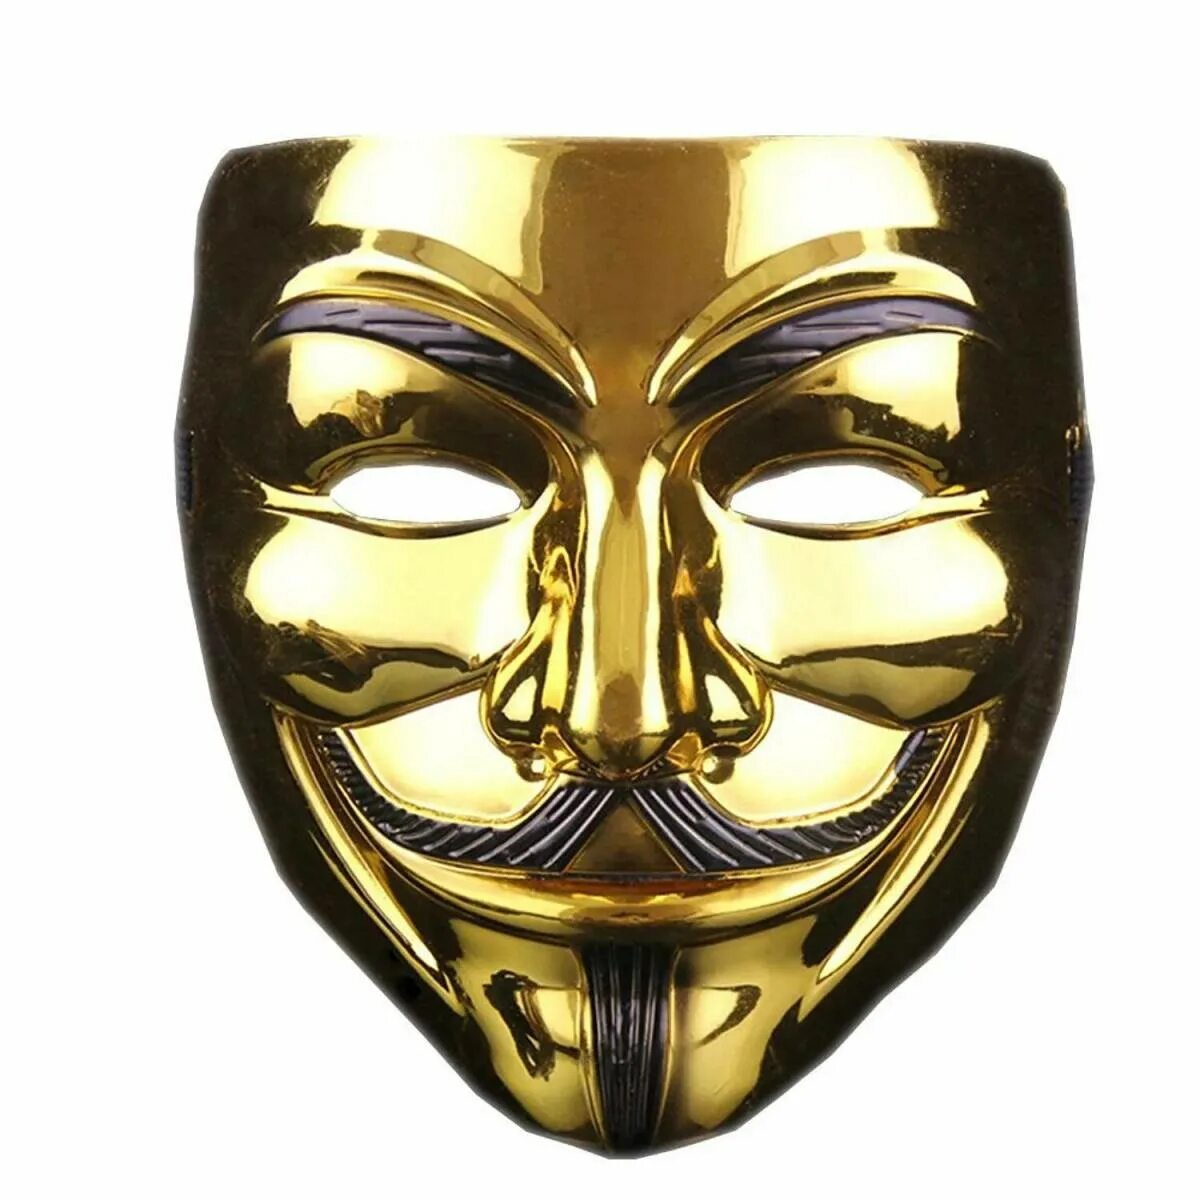 Картинка где маска. Анонимус Золотая маска хакер. Анонимус в золотой маске. Маска анонимусазалтая. Маска ультра Анонимуса Gucci 666.